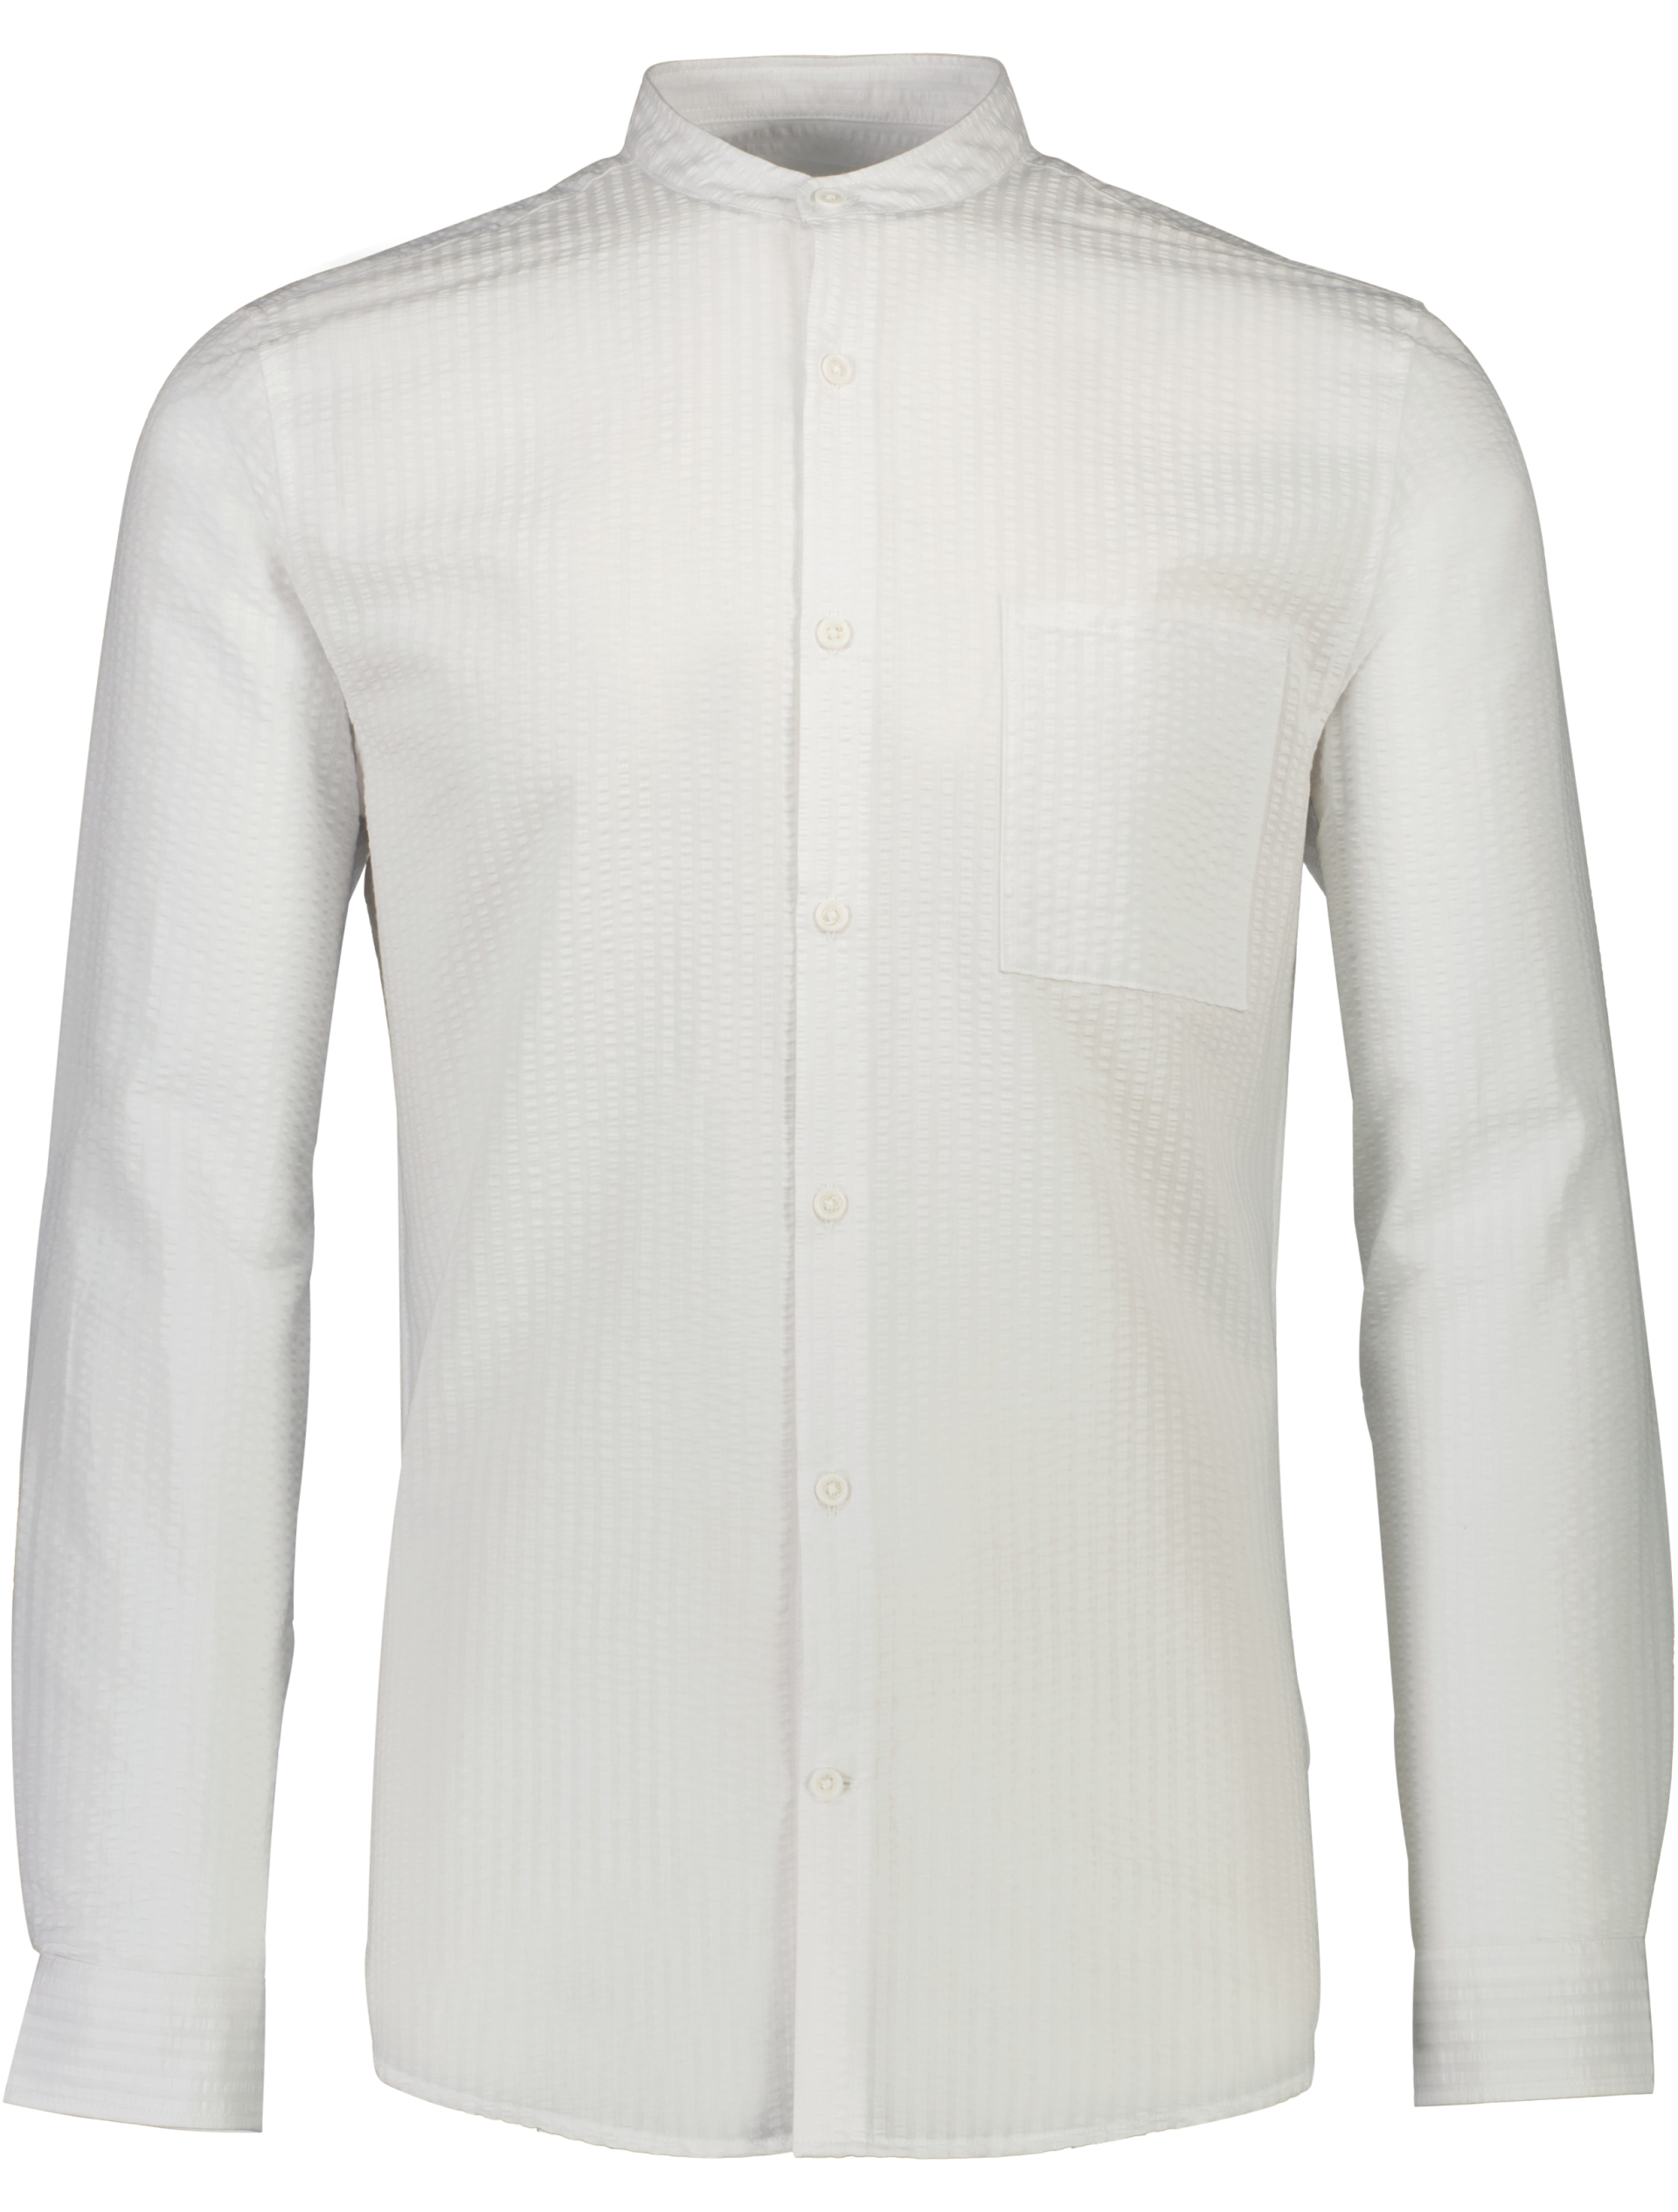 Lindbergh Casual skjorte hvid / white